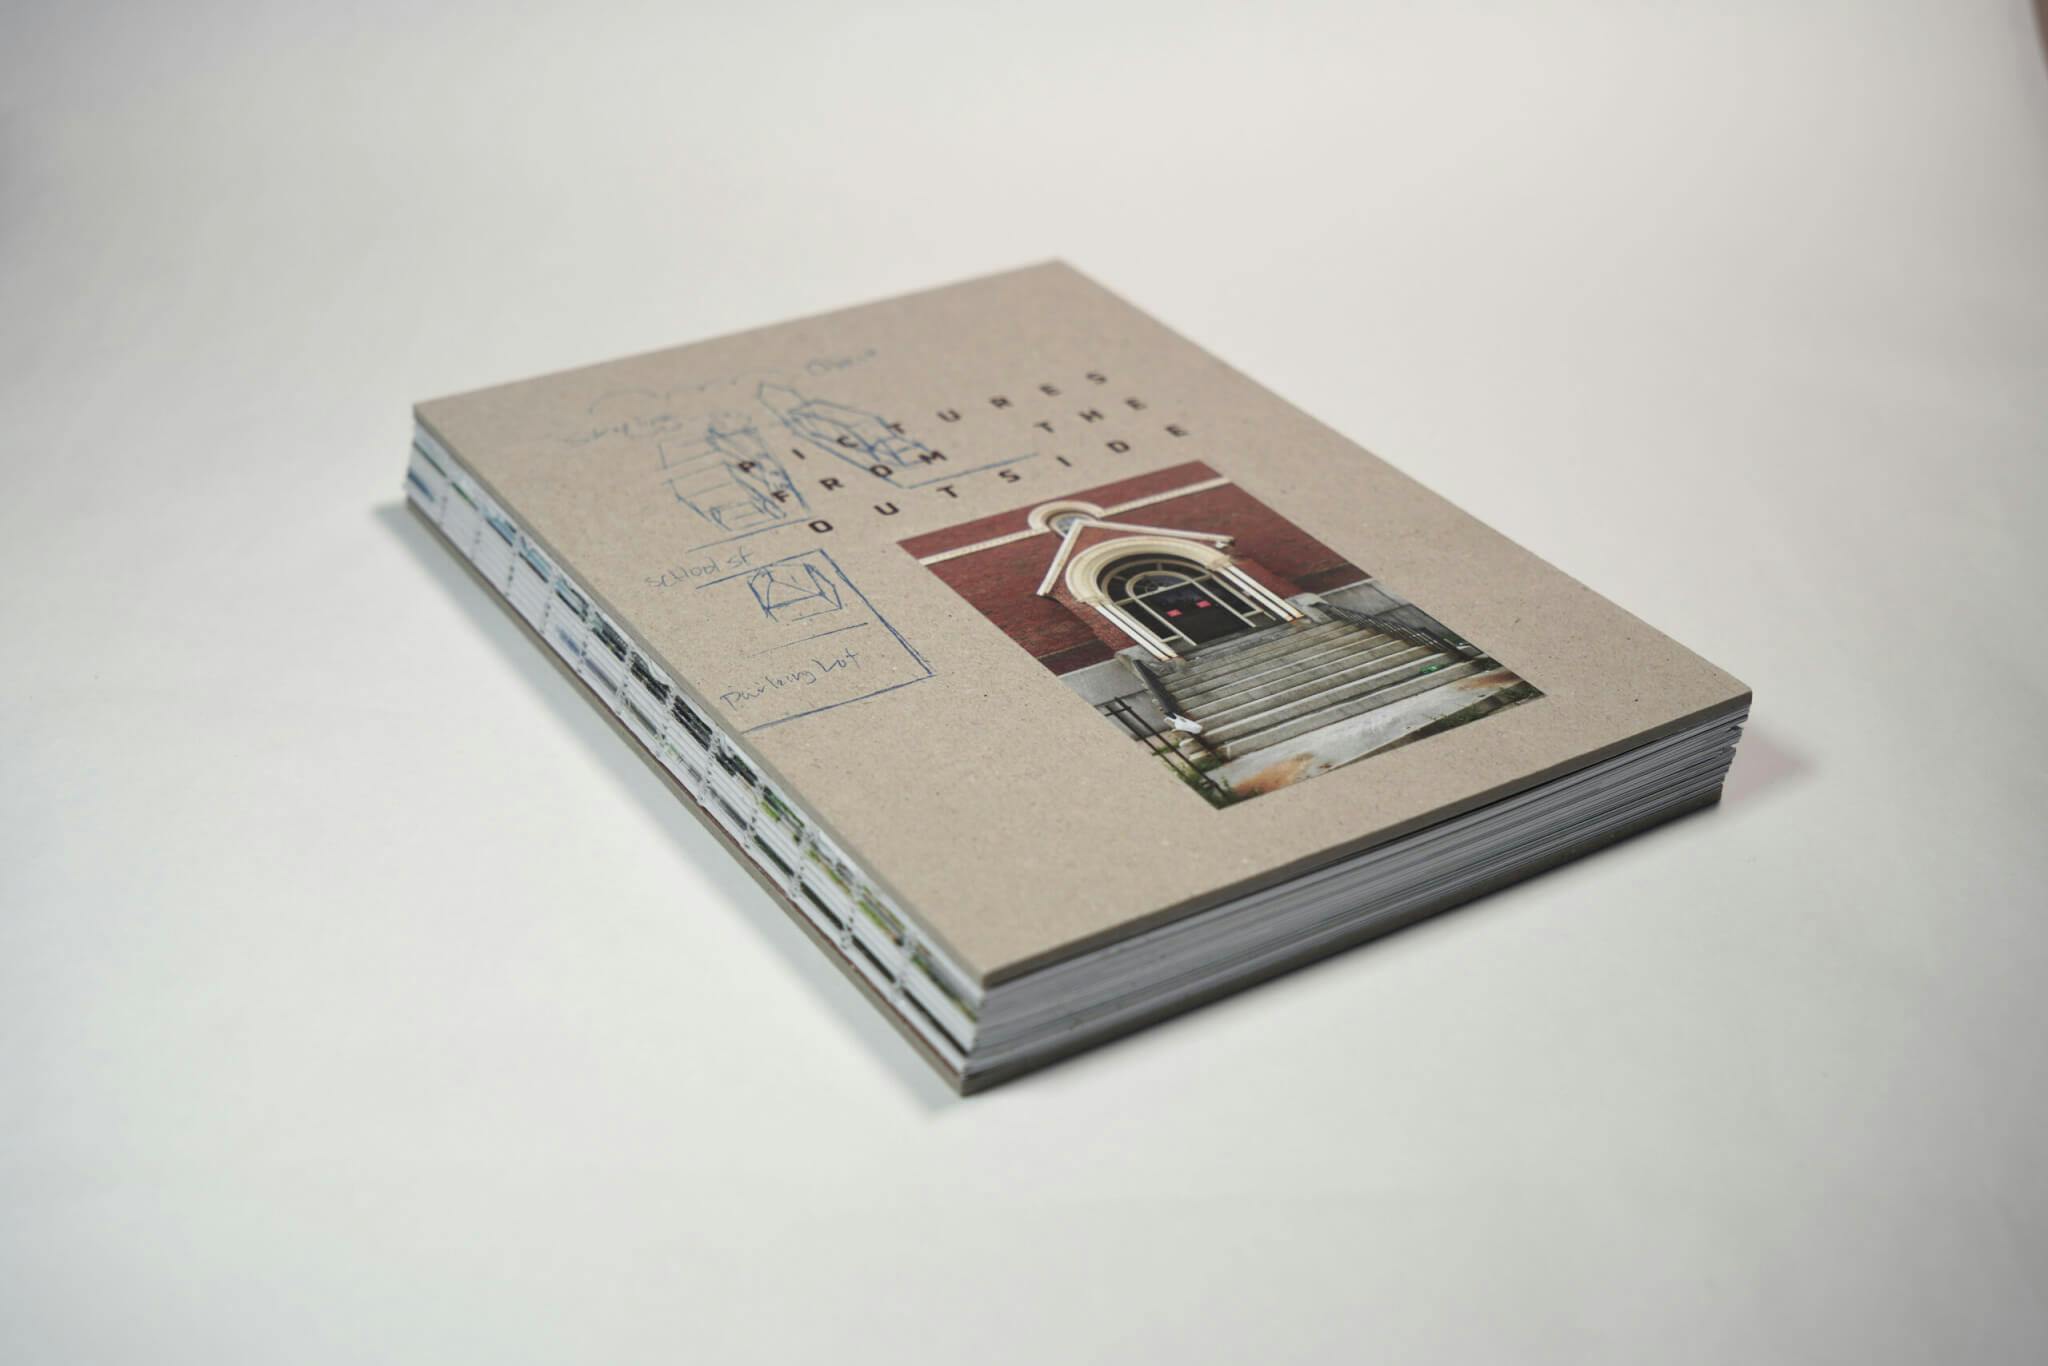 A book by Chantal Zakari, set against a white background.